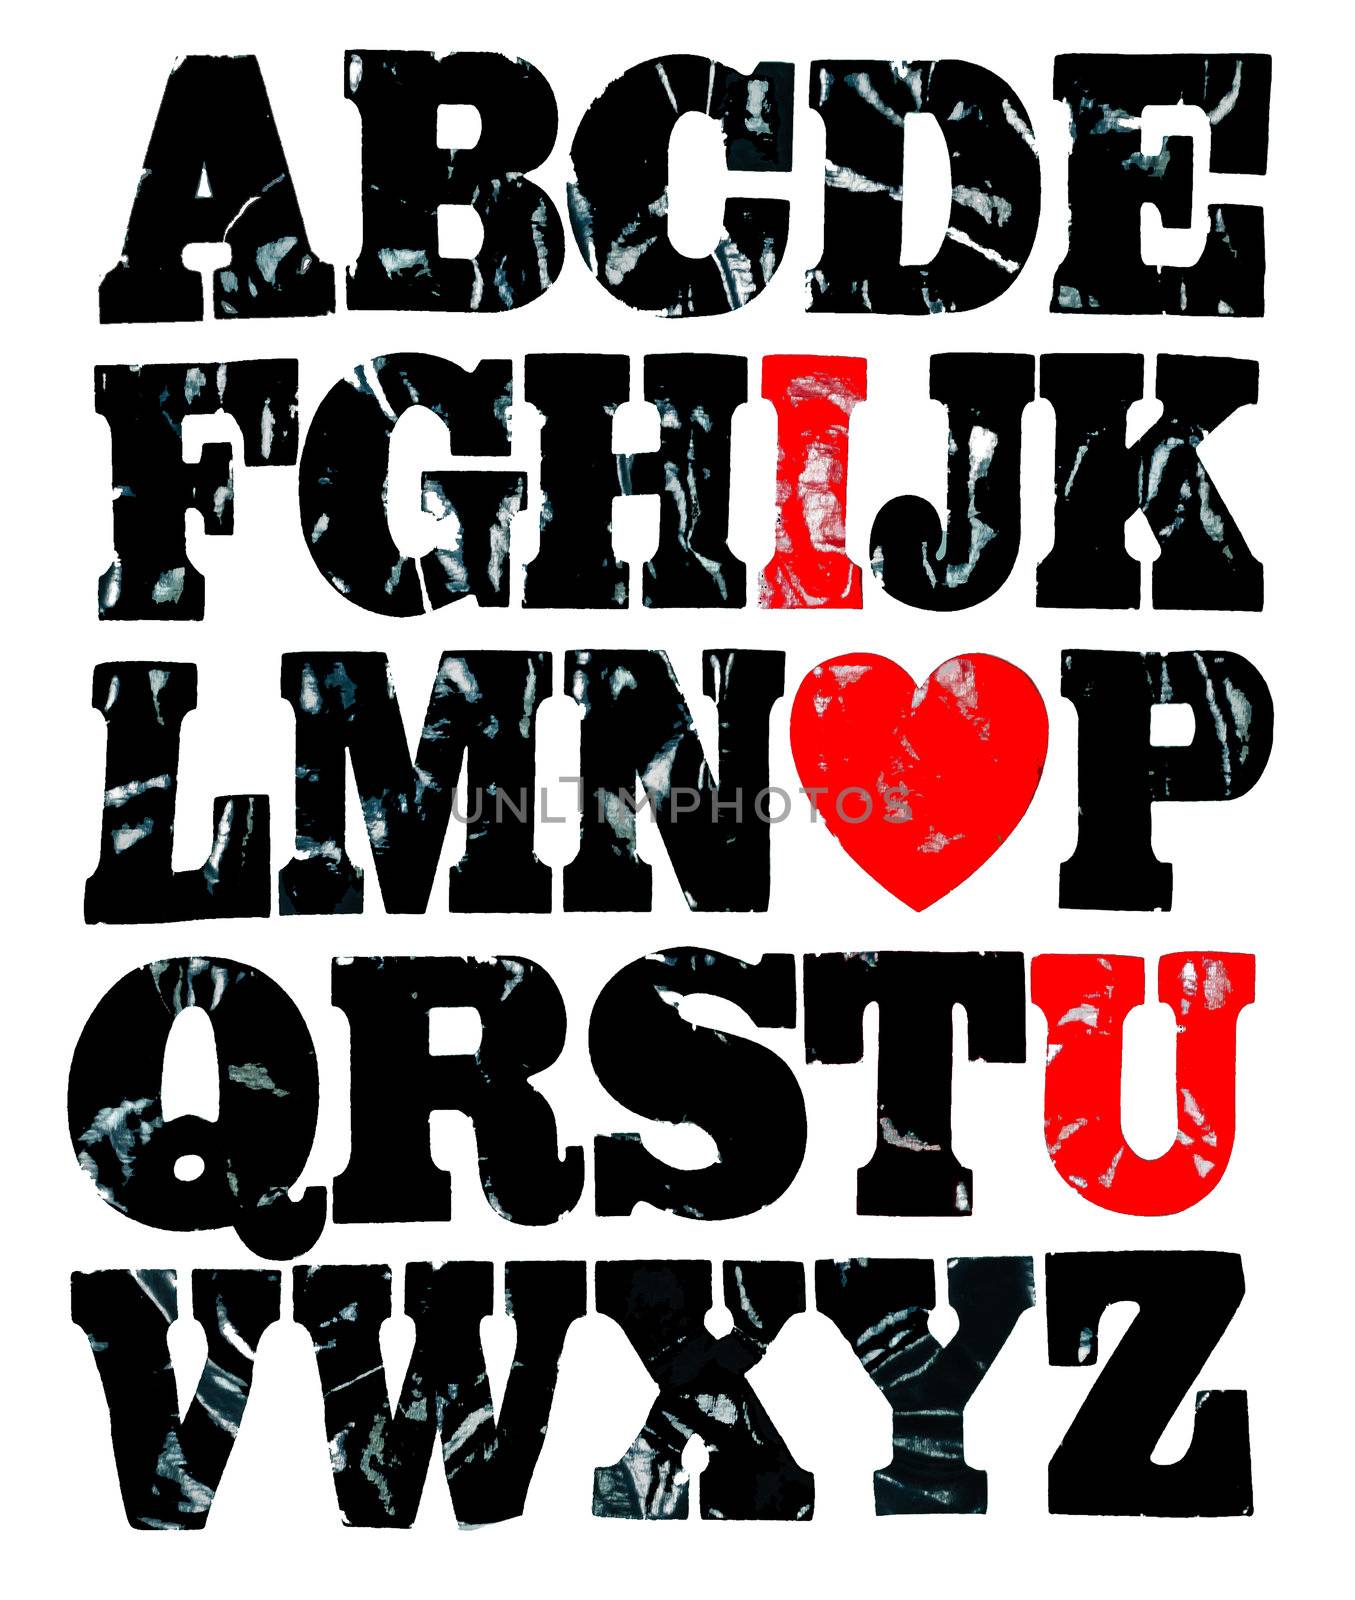 complete English alphabet grunge style on white background  by moggara12